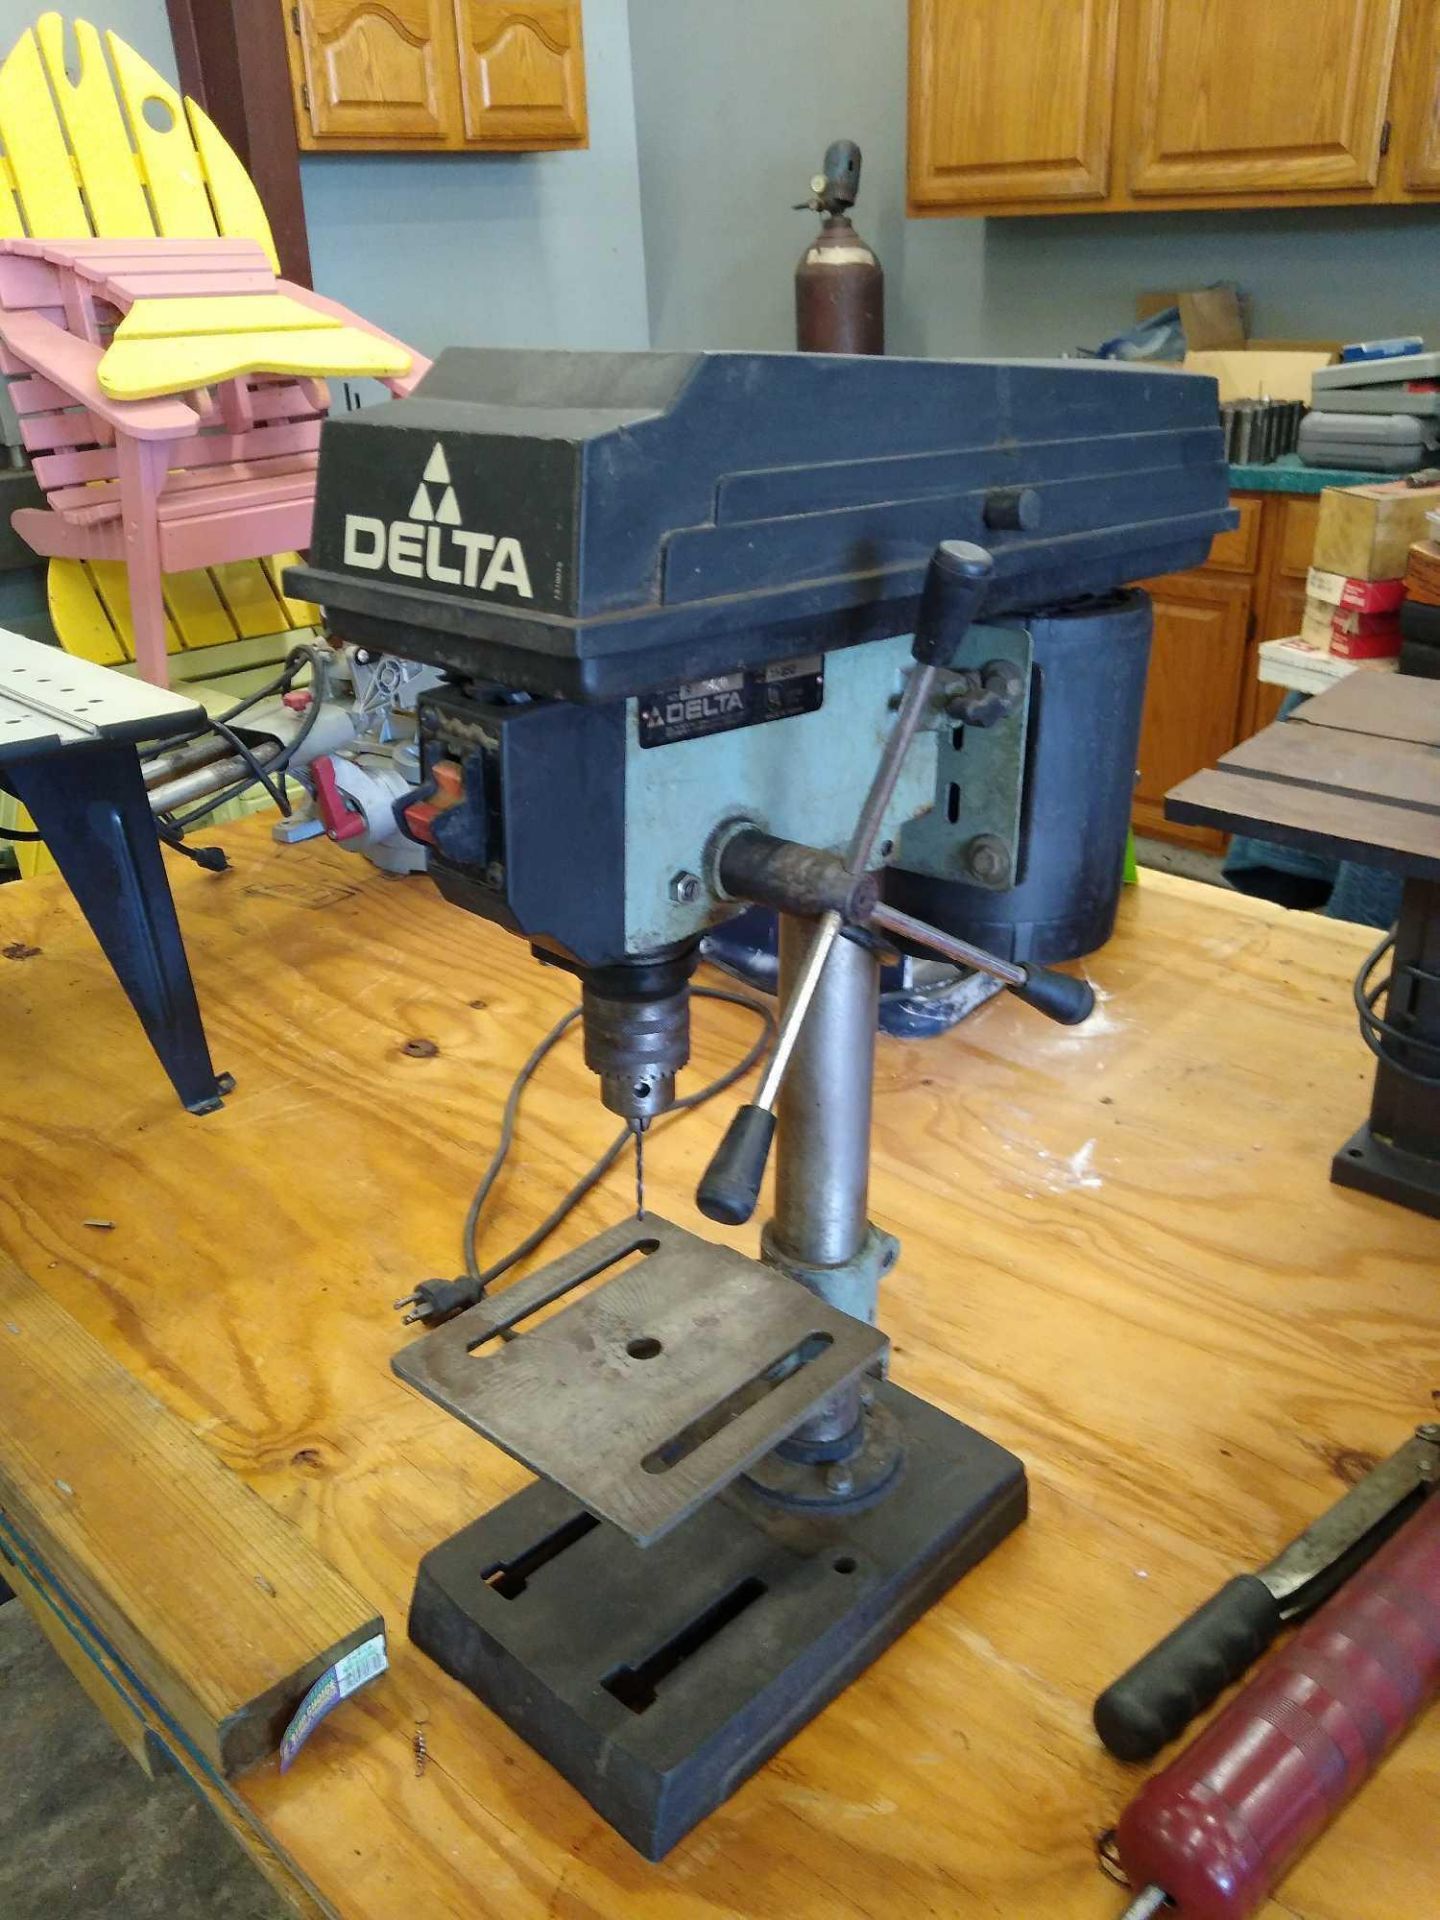 Delta Model 11-950 Bench Top Drill Press Manufacturer: Delta Model: 11-950 S/N: R 9420 Year: 1994 Th